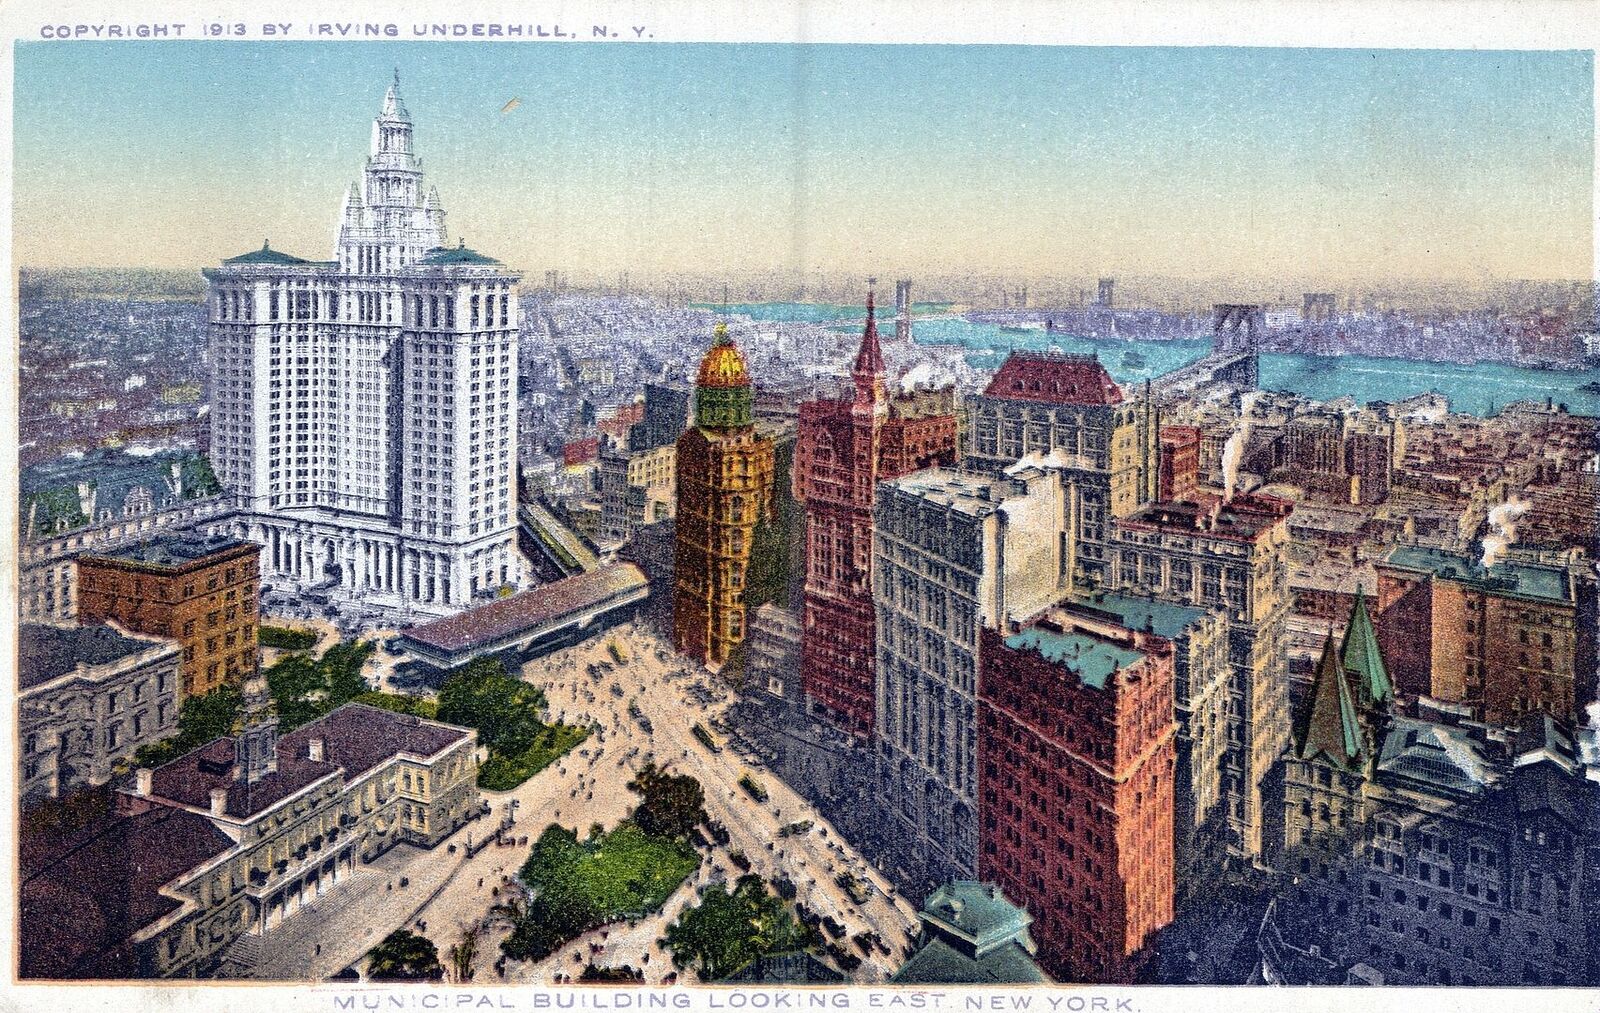 NEW YORK CITY - Municipal Building Looking East Postcard